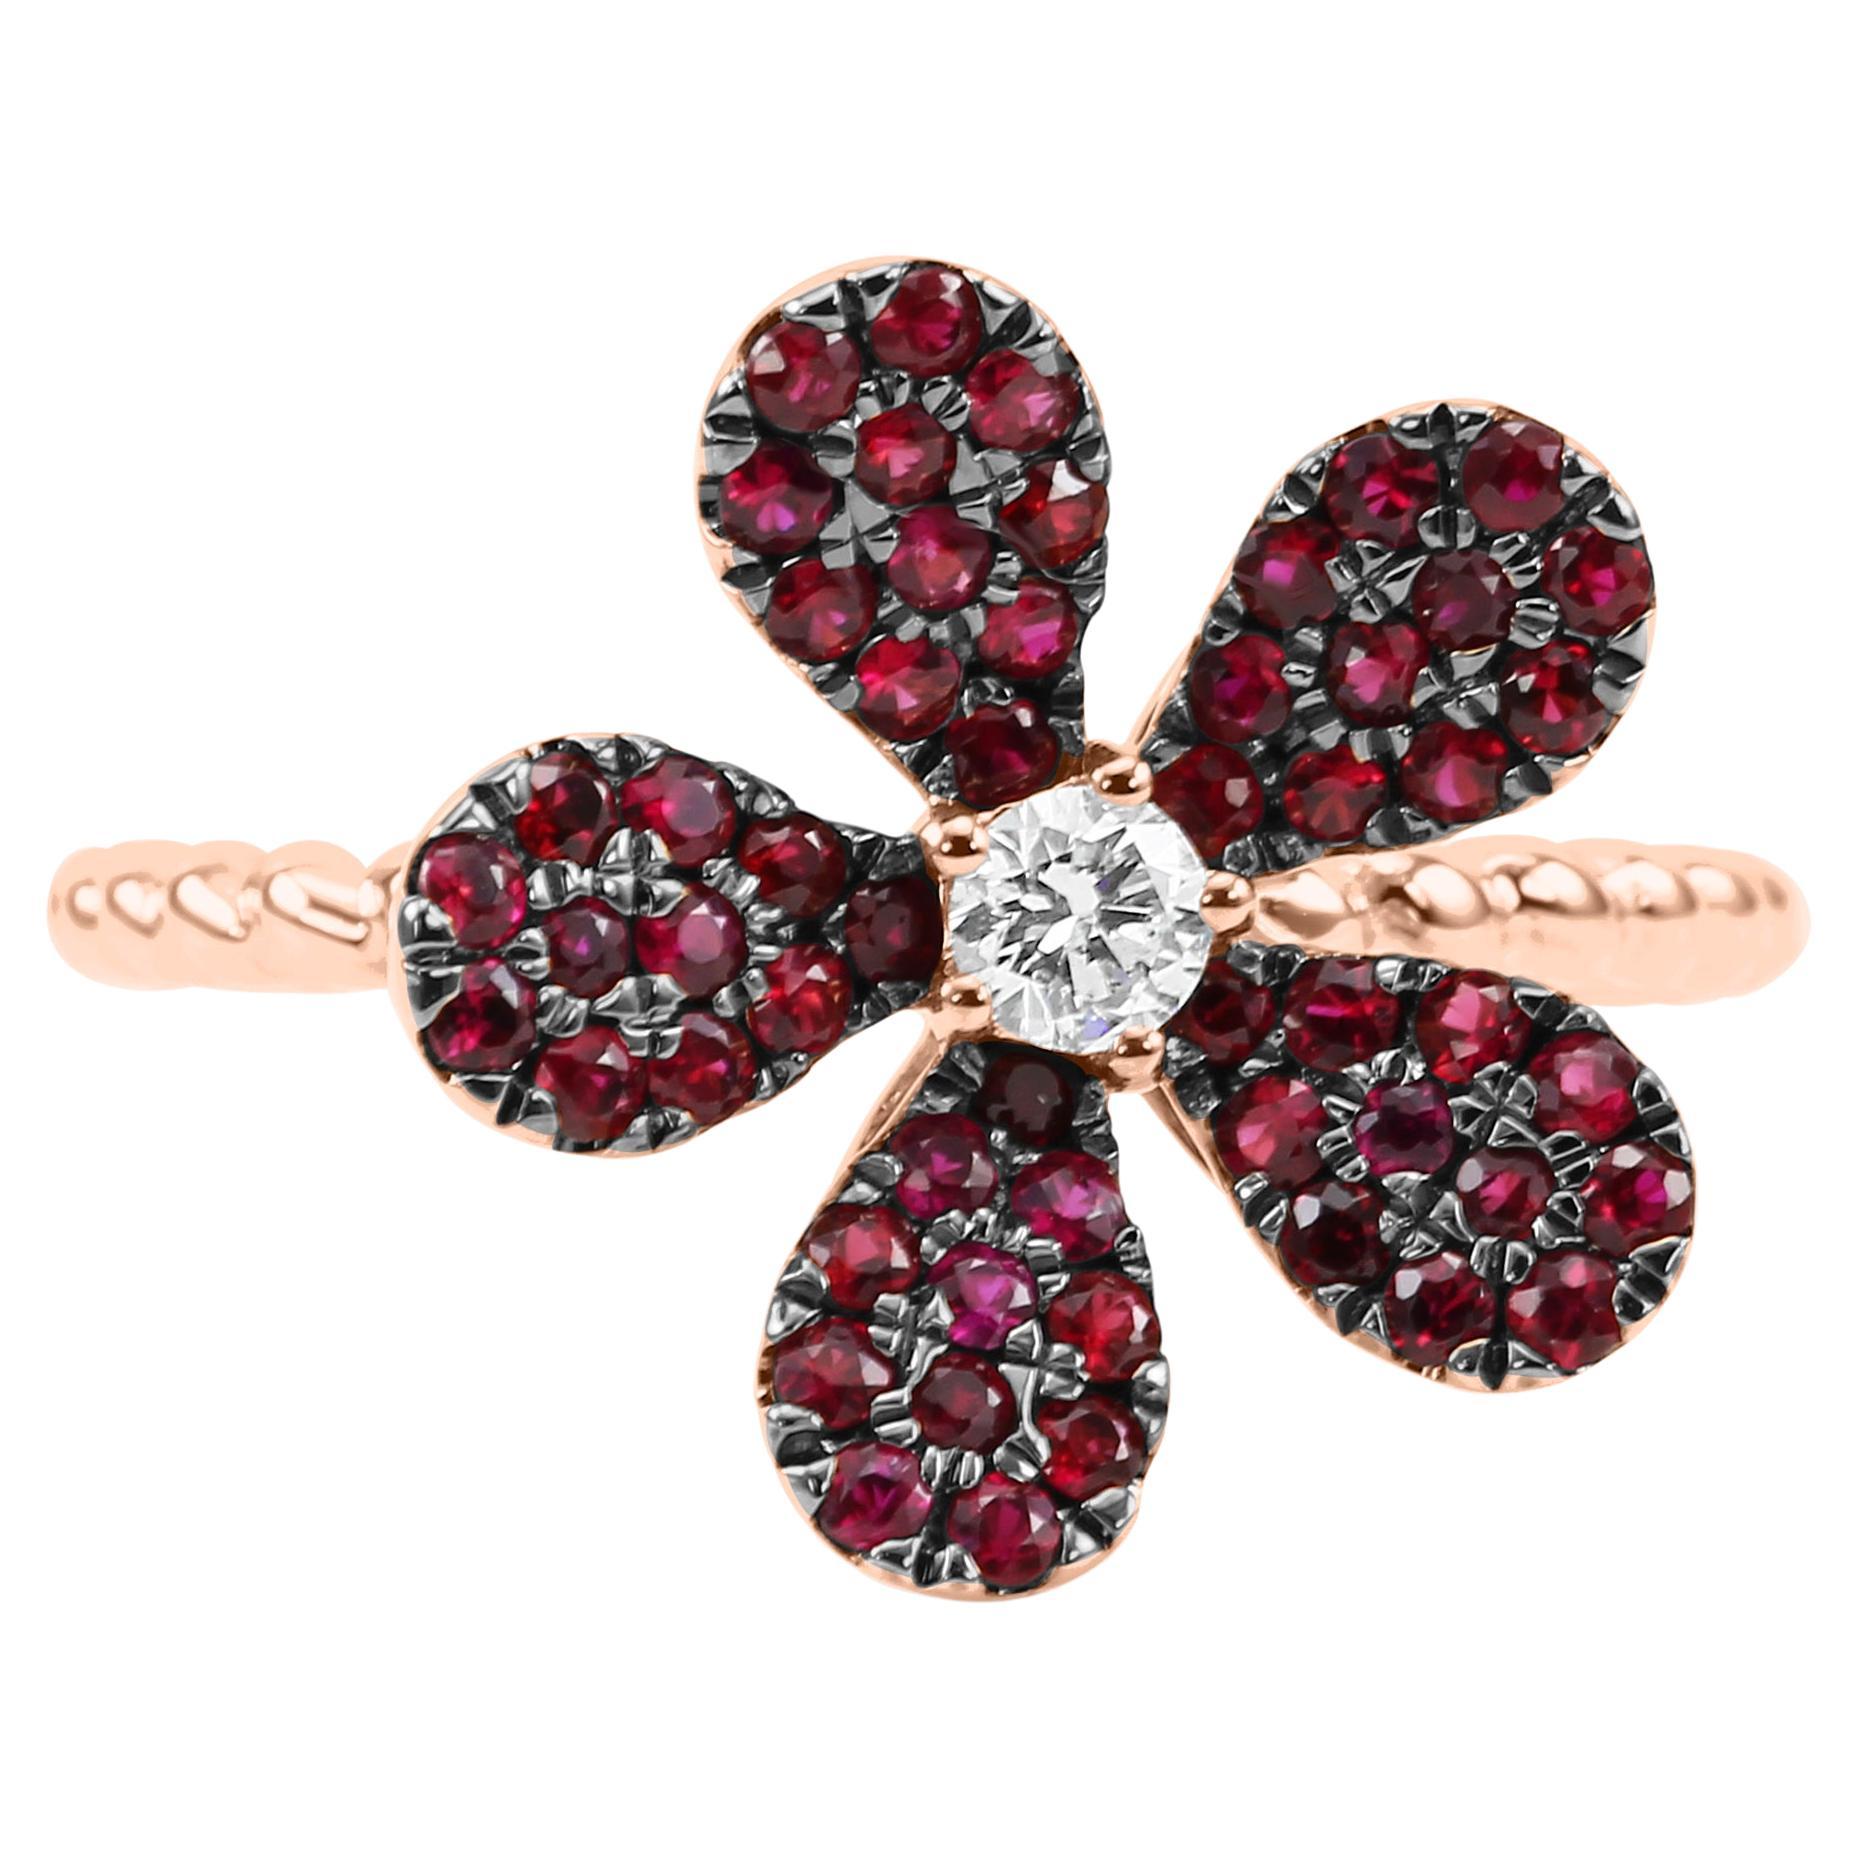  Ruby Round White Diamond 14K Rose Gold Flower Shape Cocktail Fashion Ring 